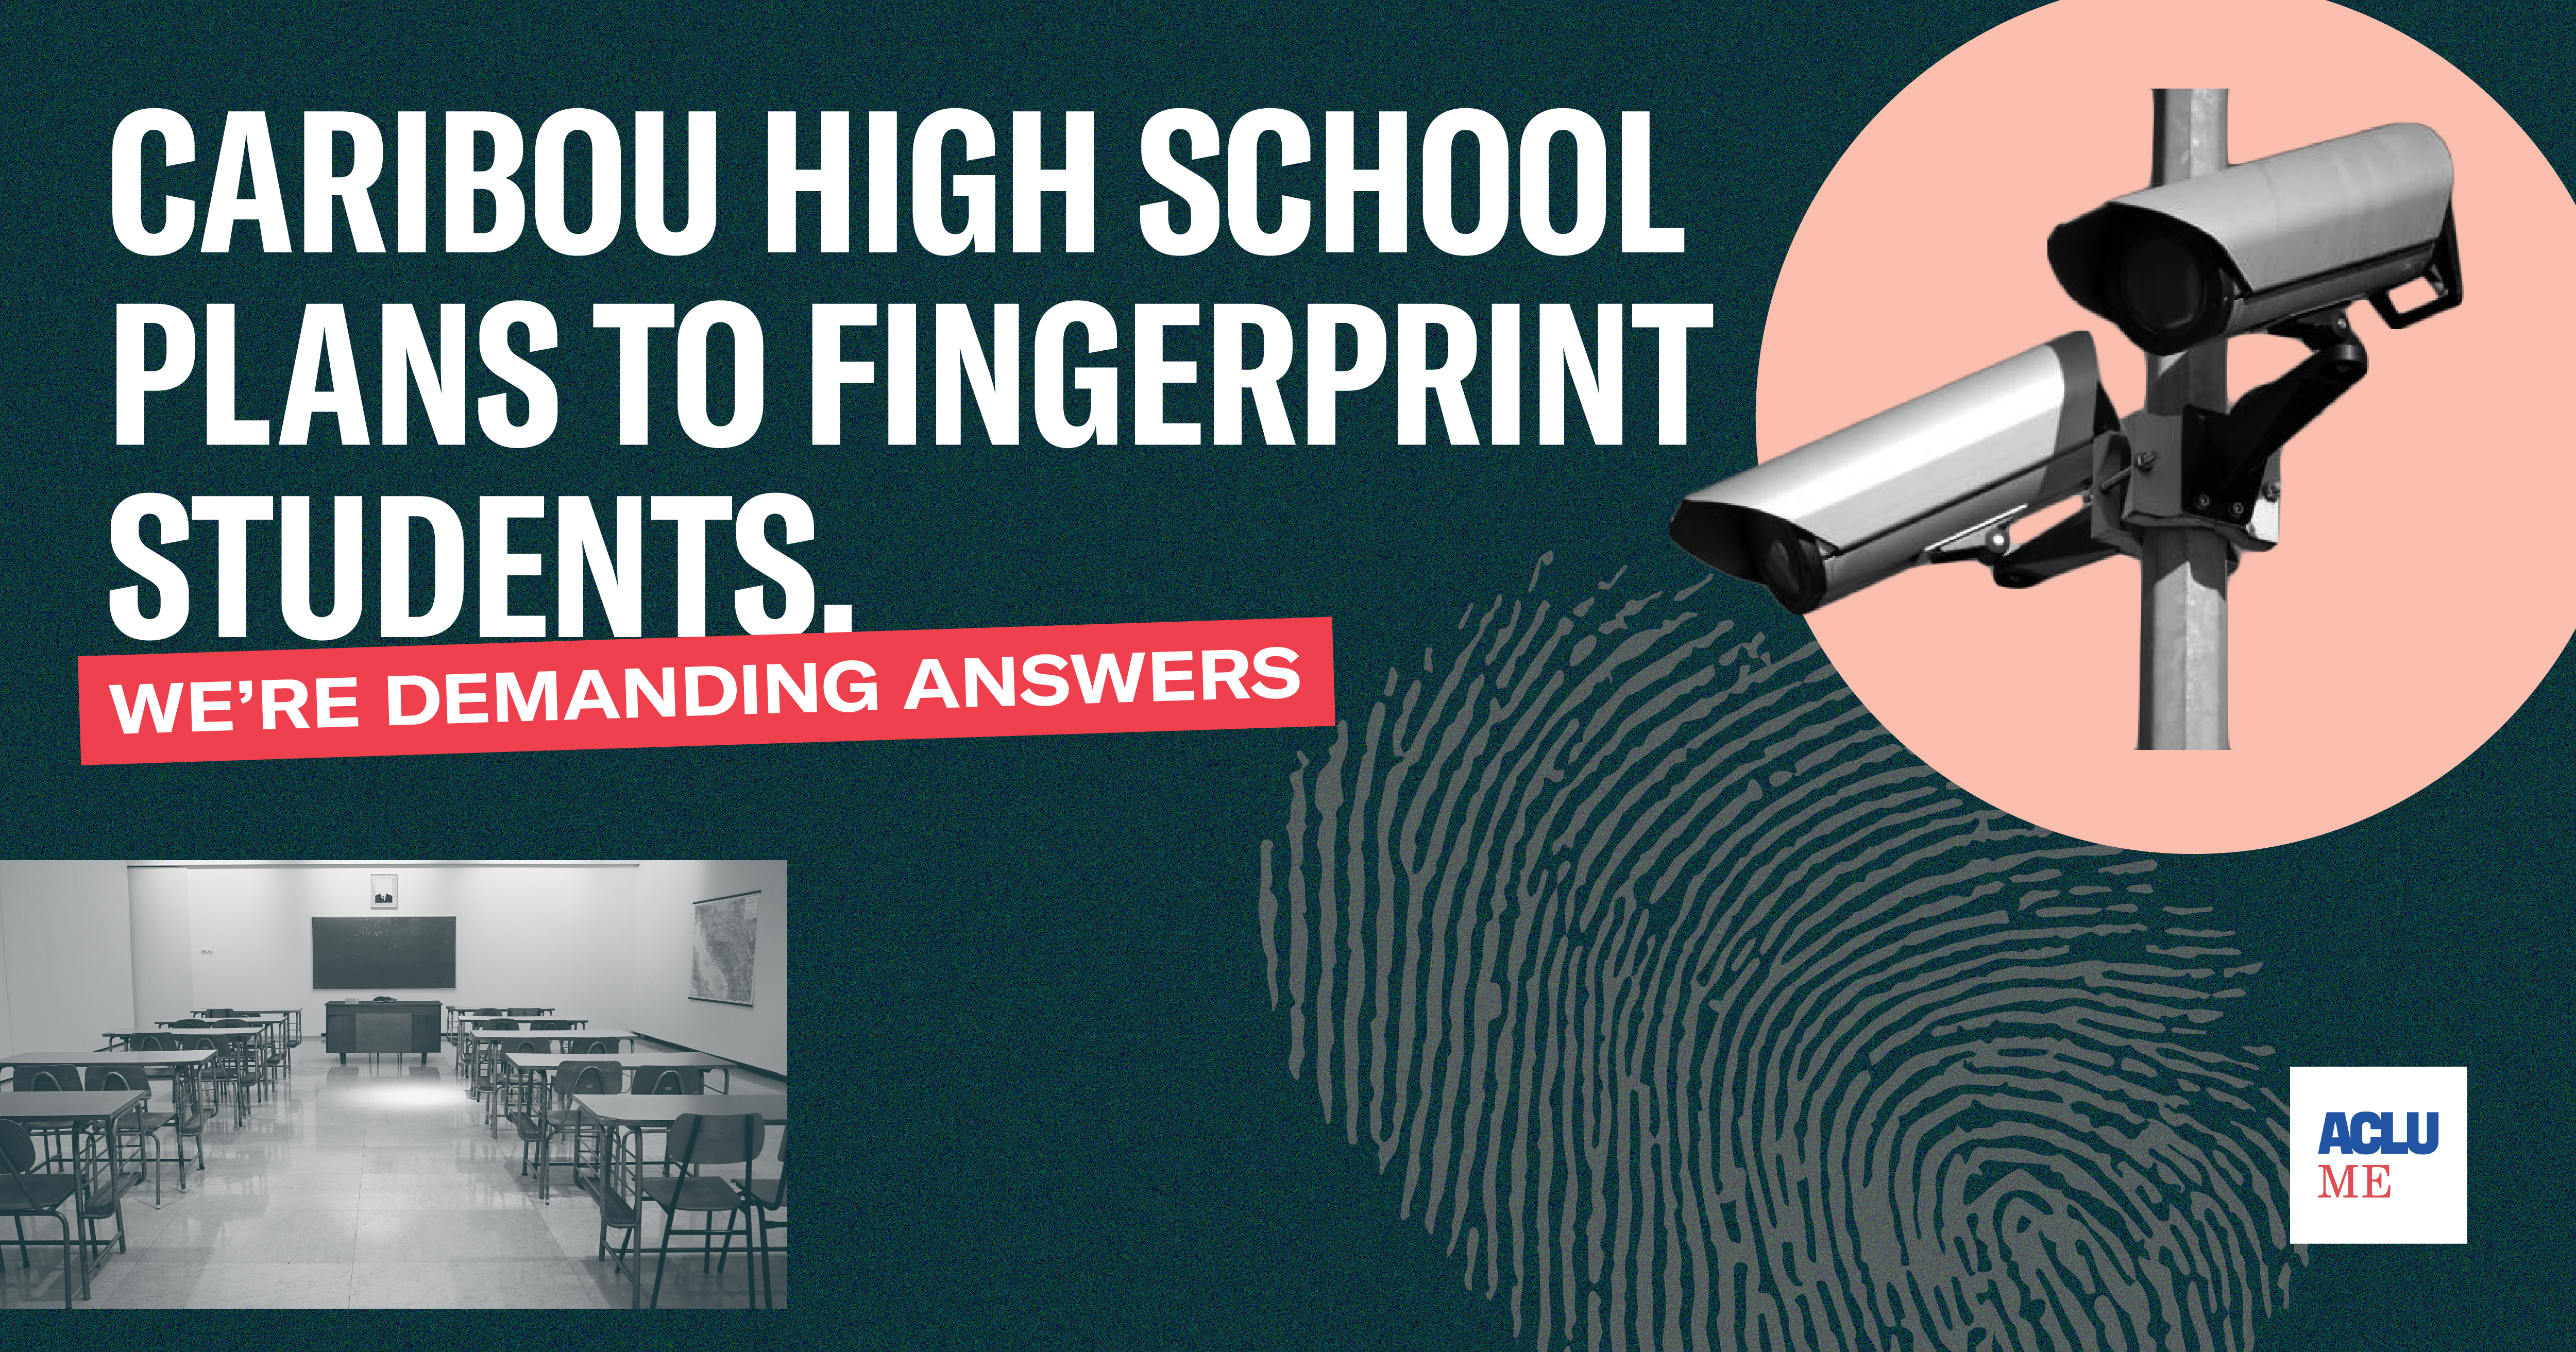 Caribou High School plans to fingerprint students. We're demanding answers.